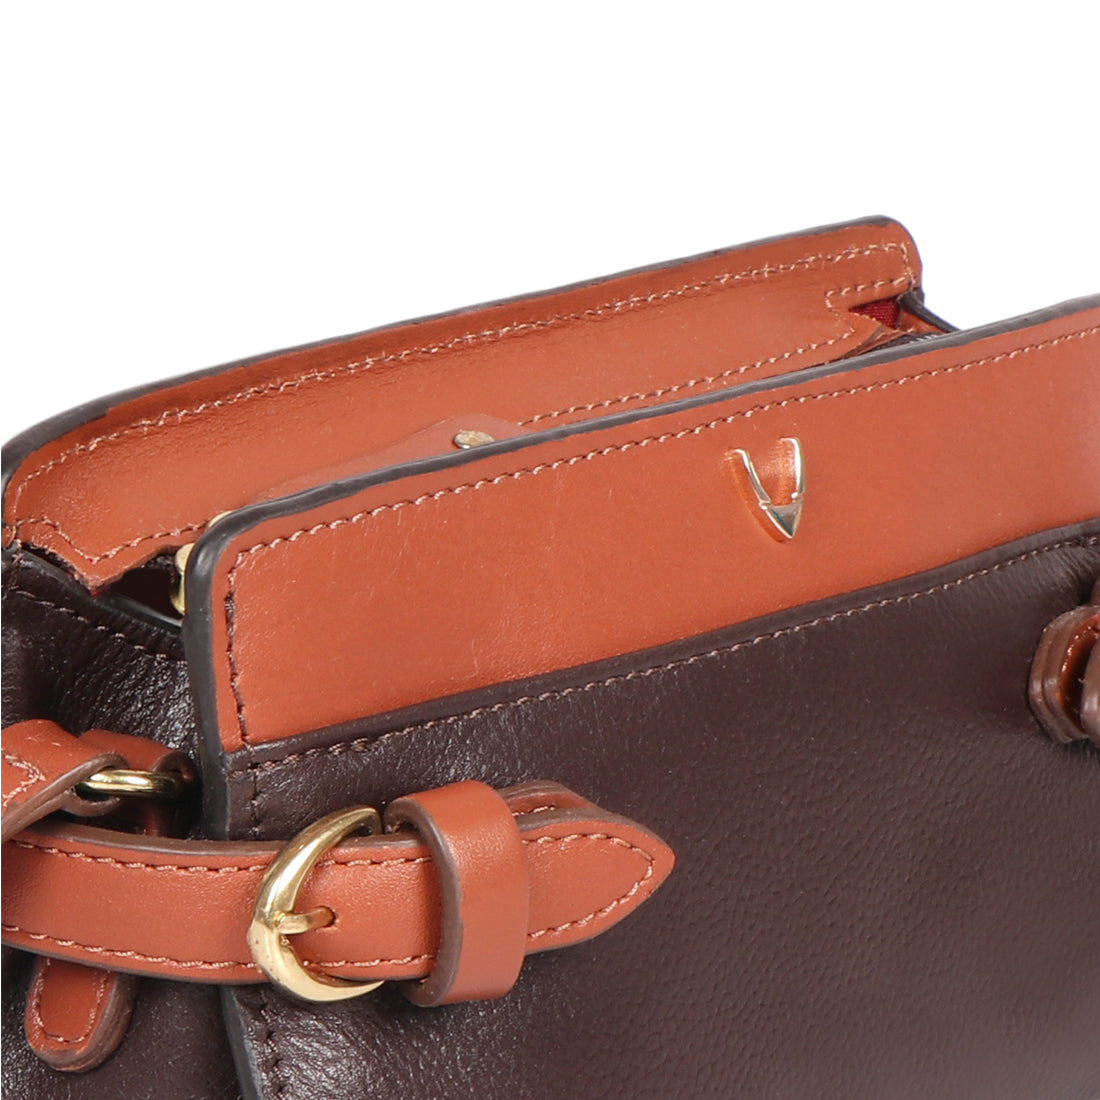 Buy Marsala Salta 03 Sling Bag Online - Hidesign